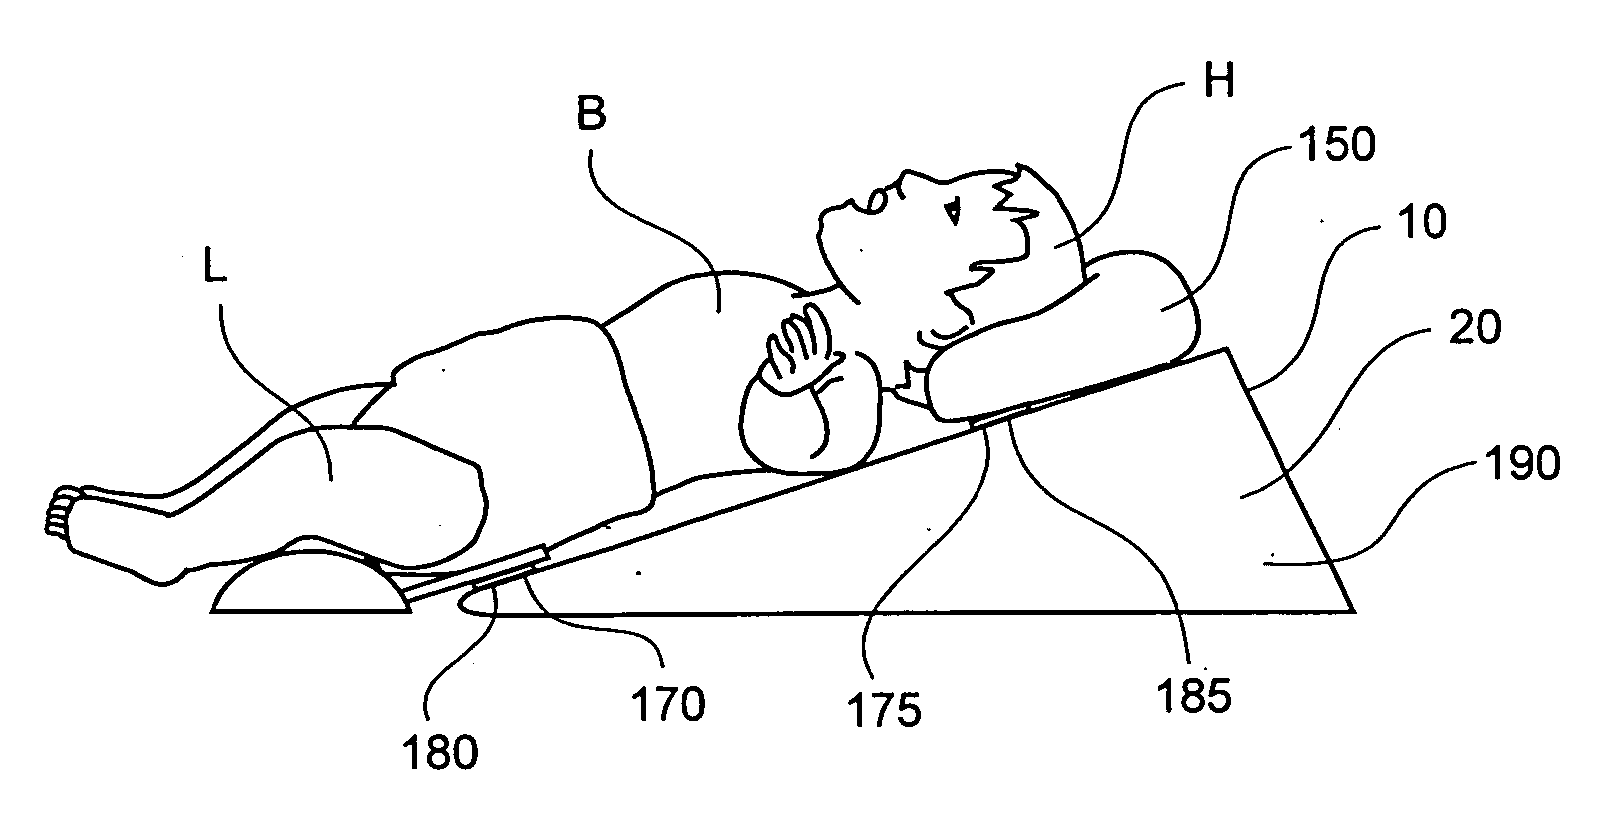 Baby sleeping cushion and method of use thereof